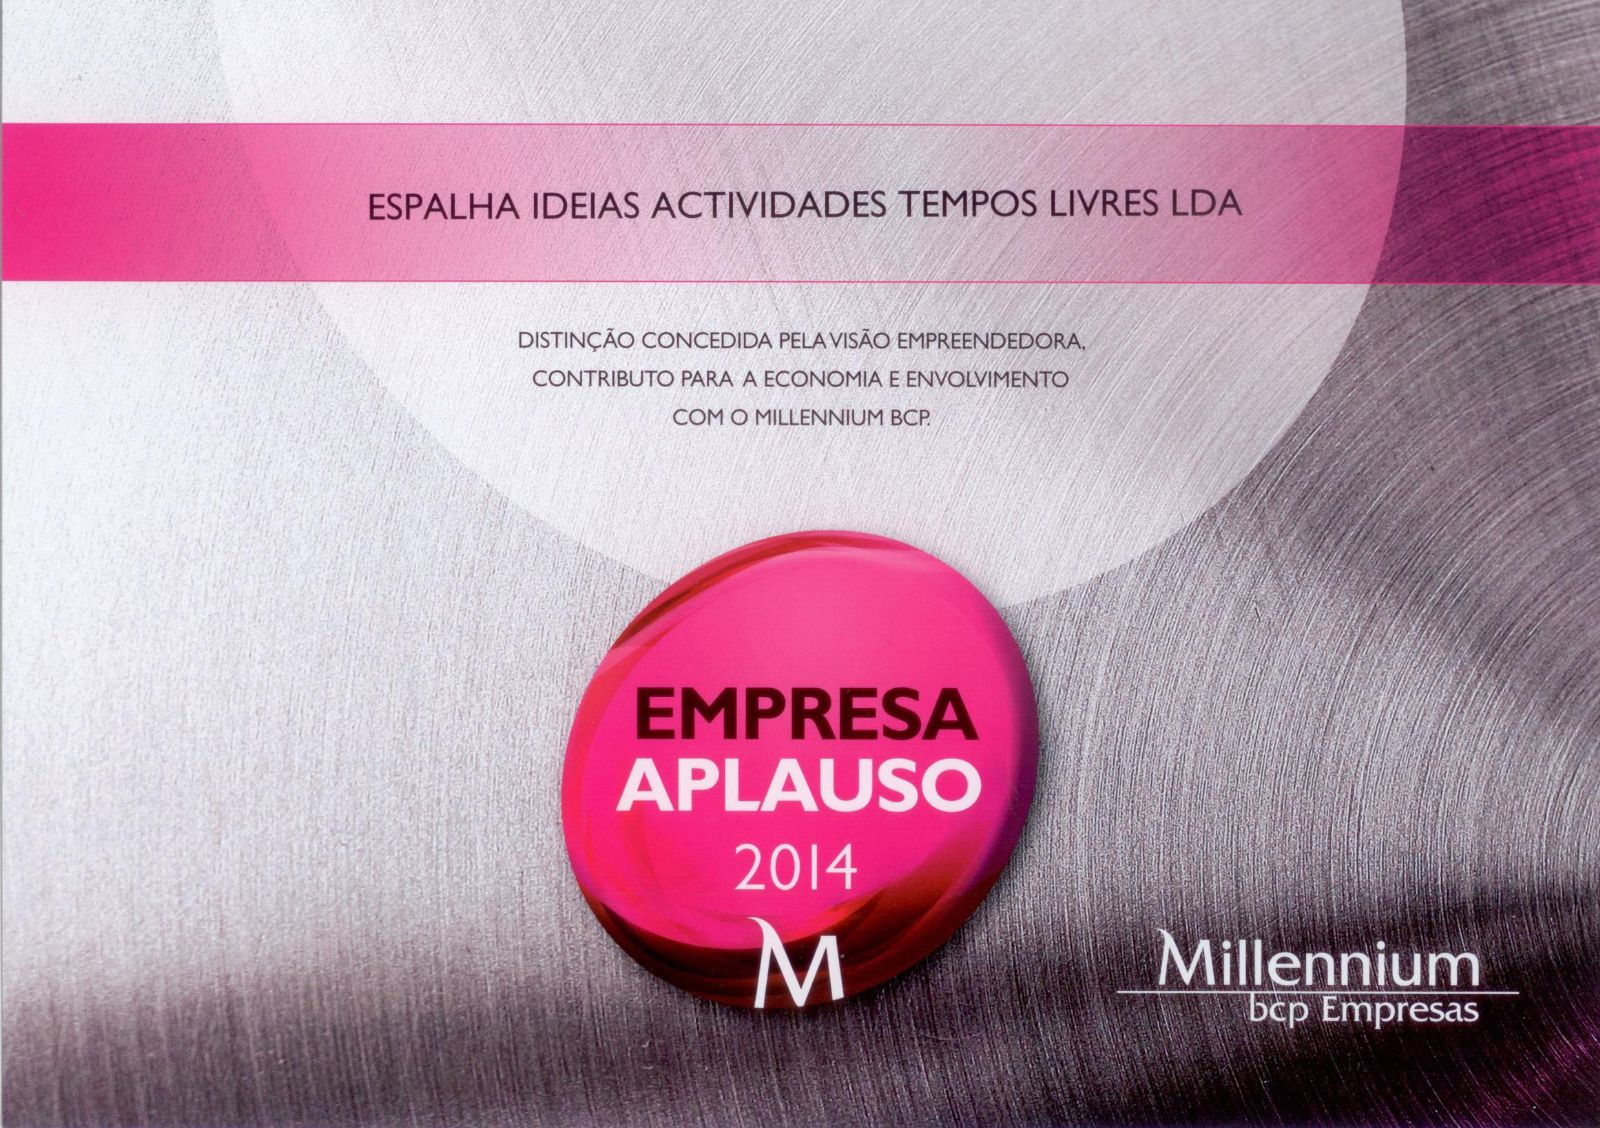 Empresa Aplauso 2014 - Millennium BCP